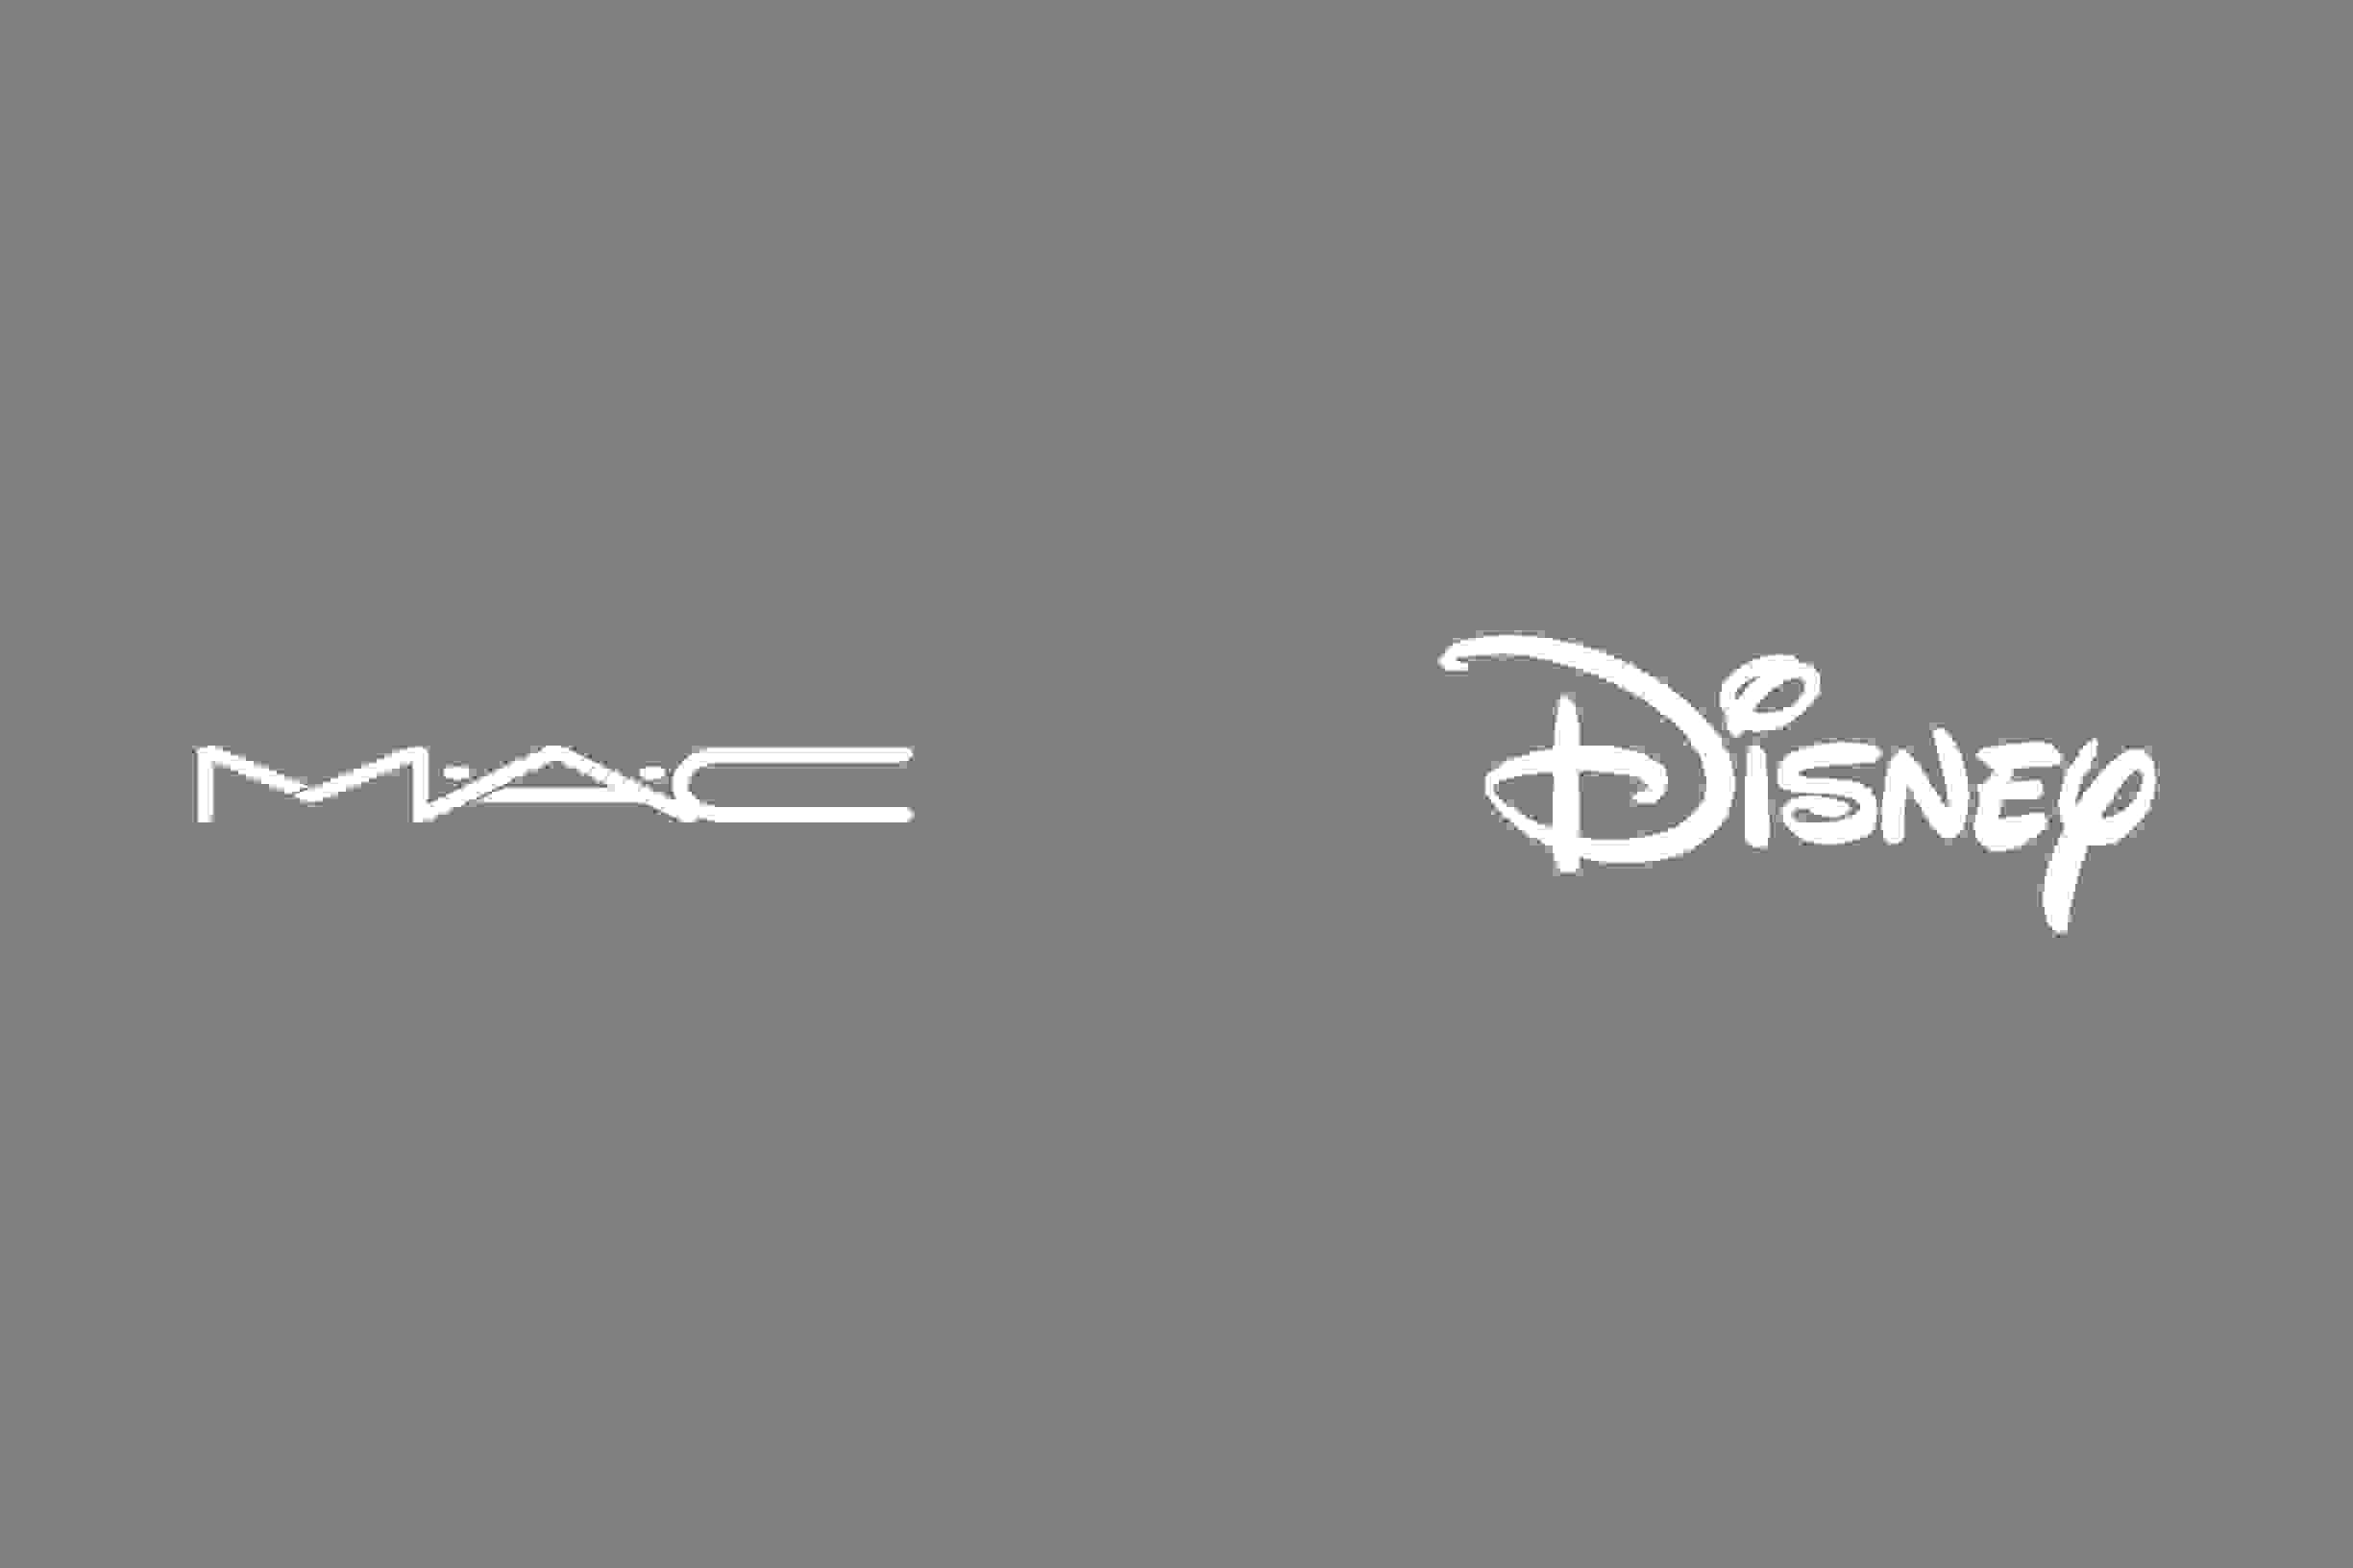 Mac and Disney logo side by side